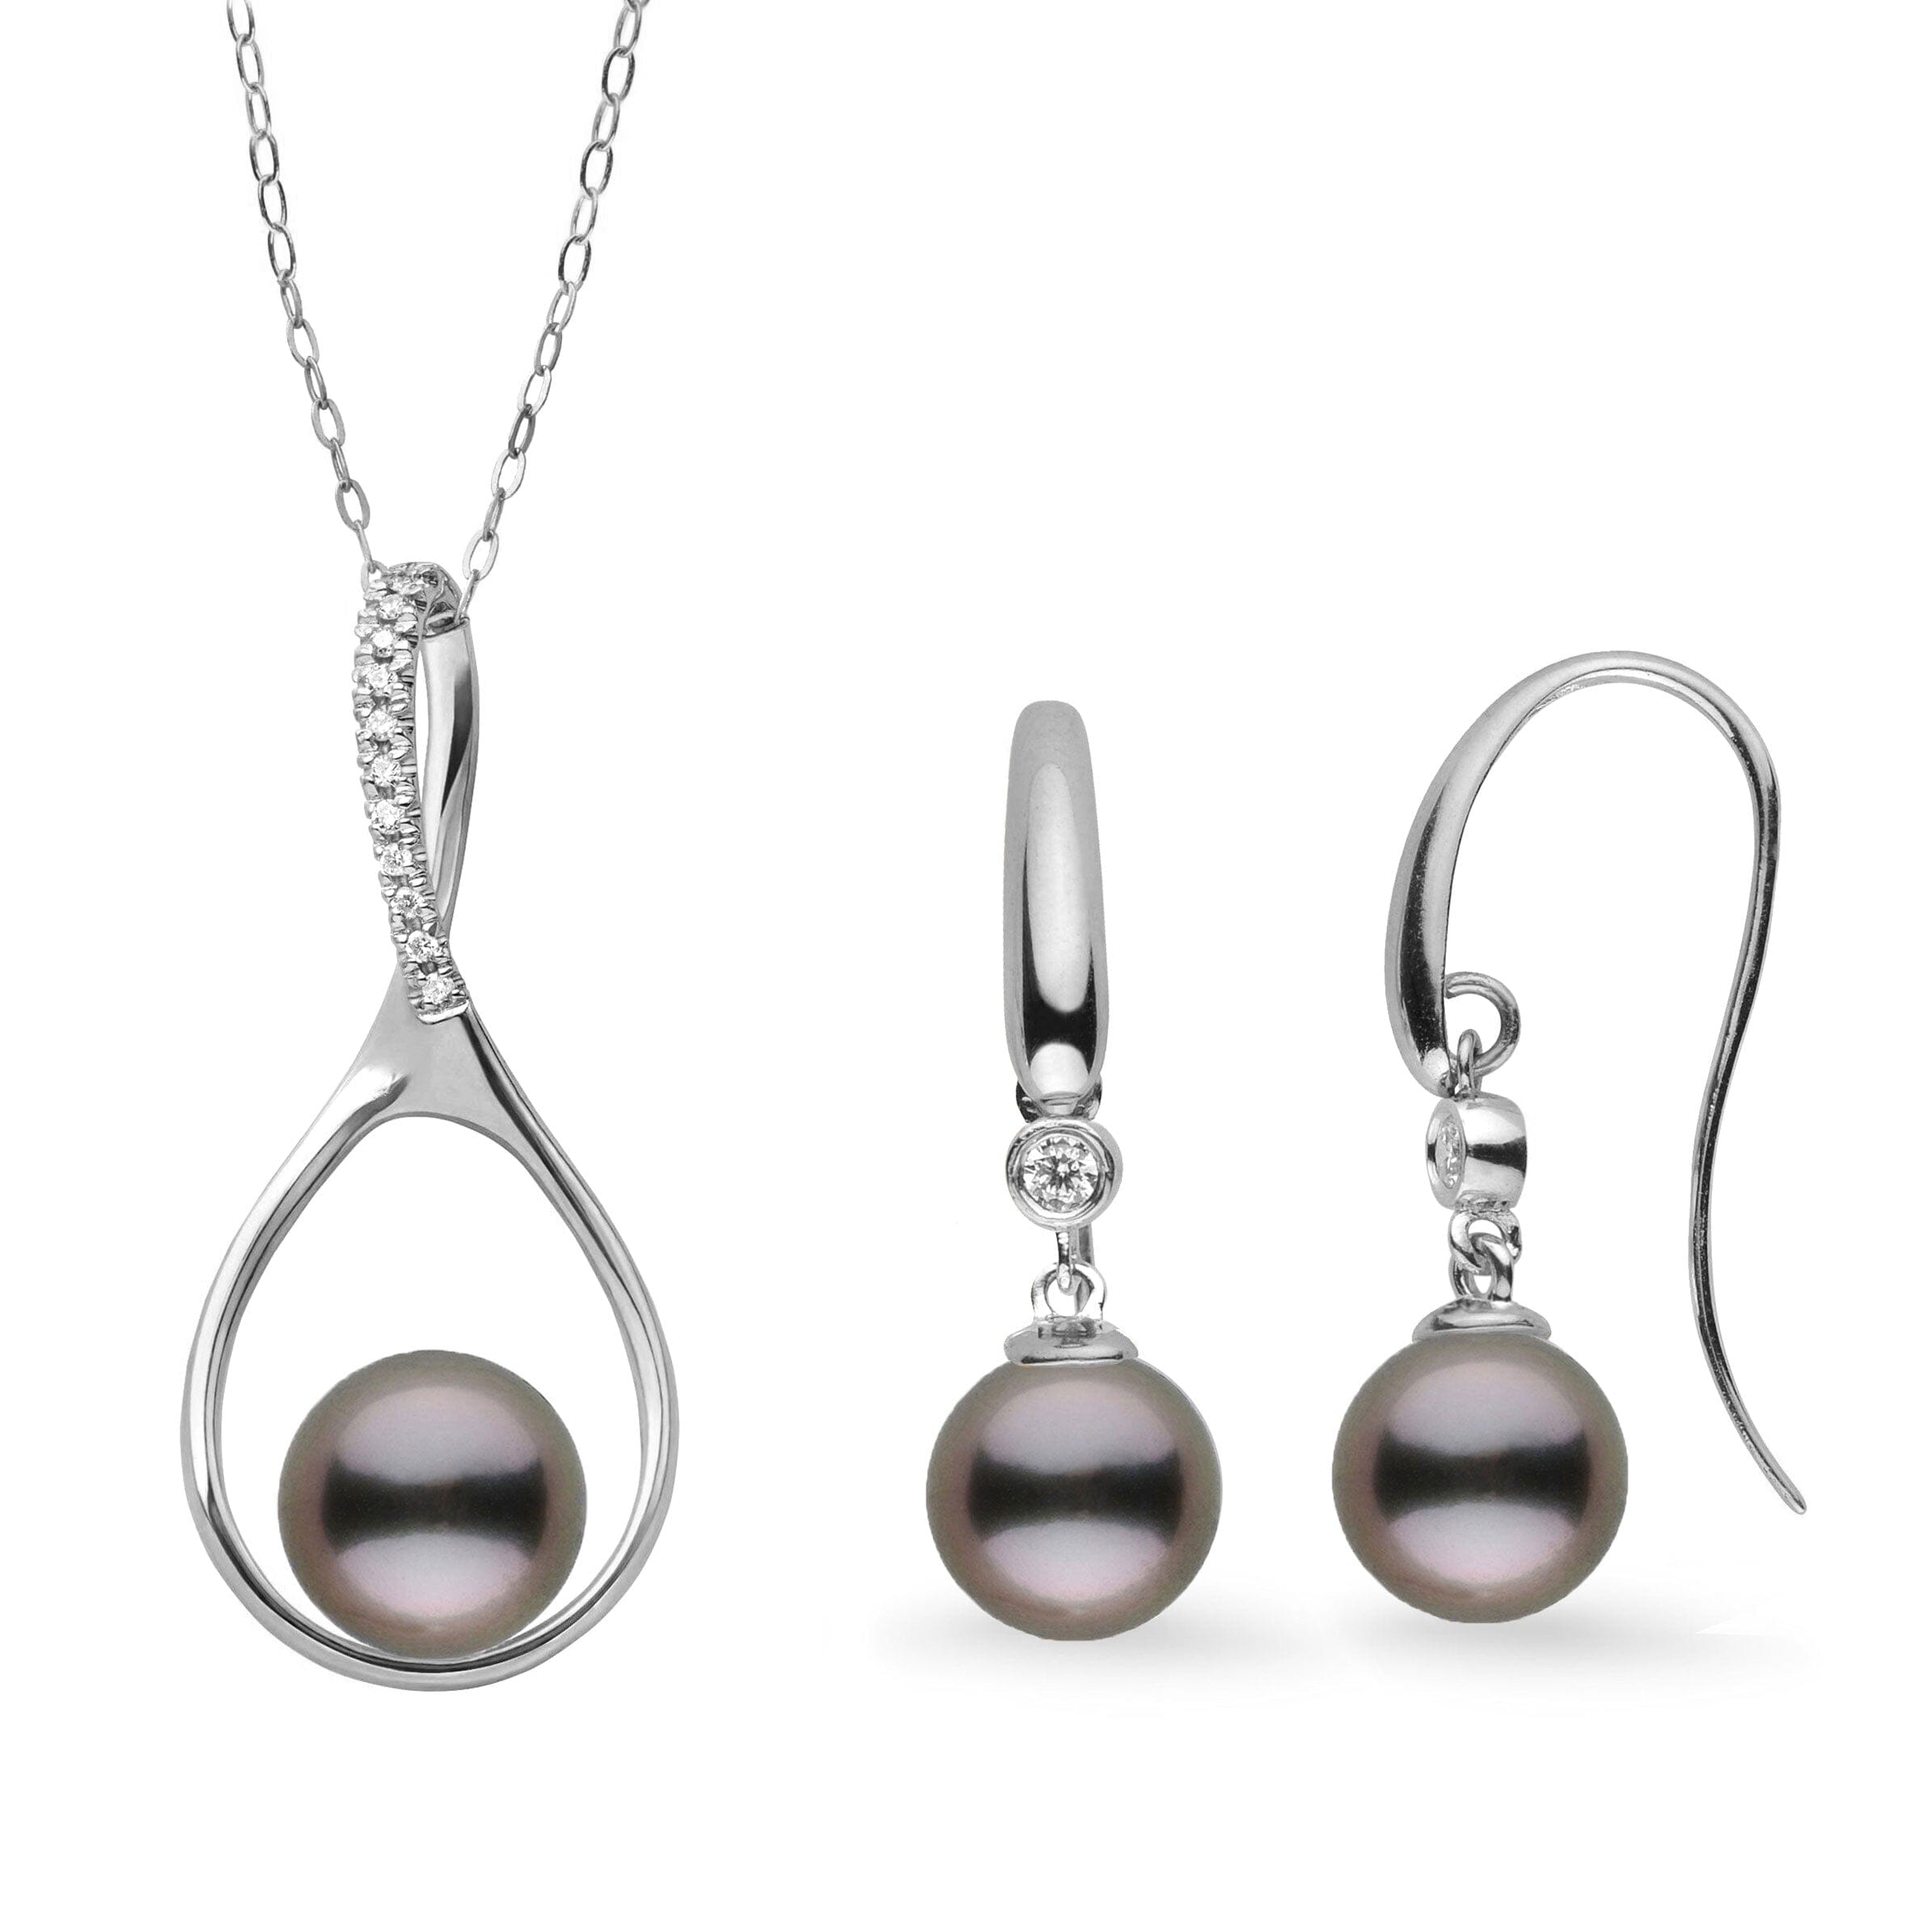 Buy latest Black pearl necklace online  Kalyan Jewellers